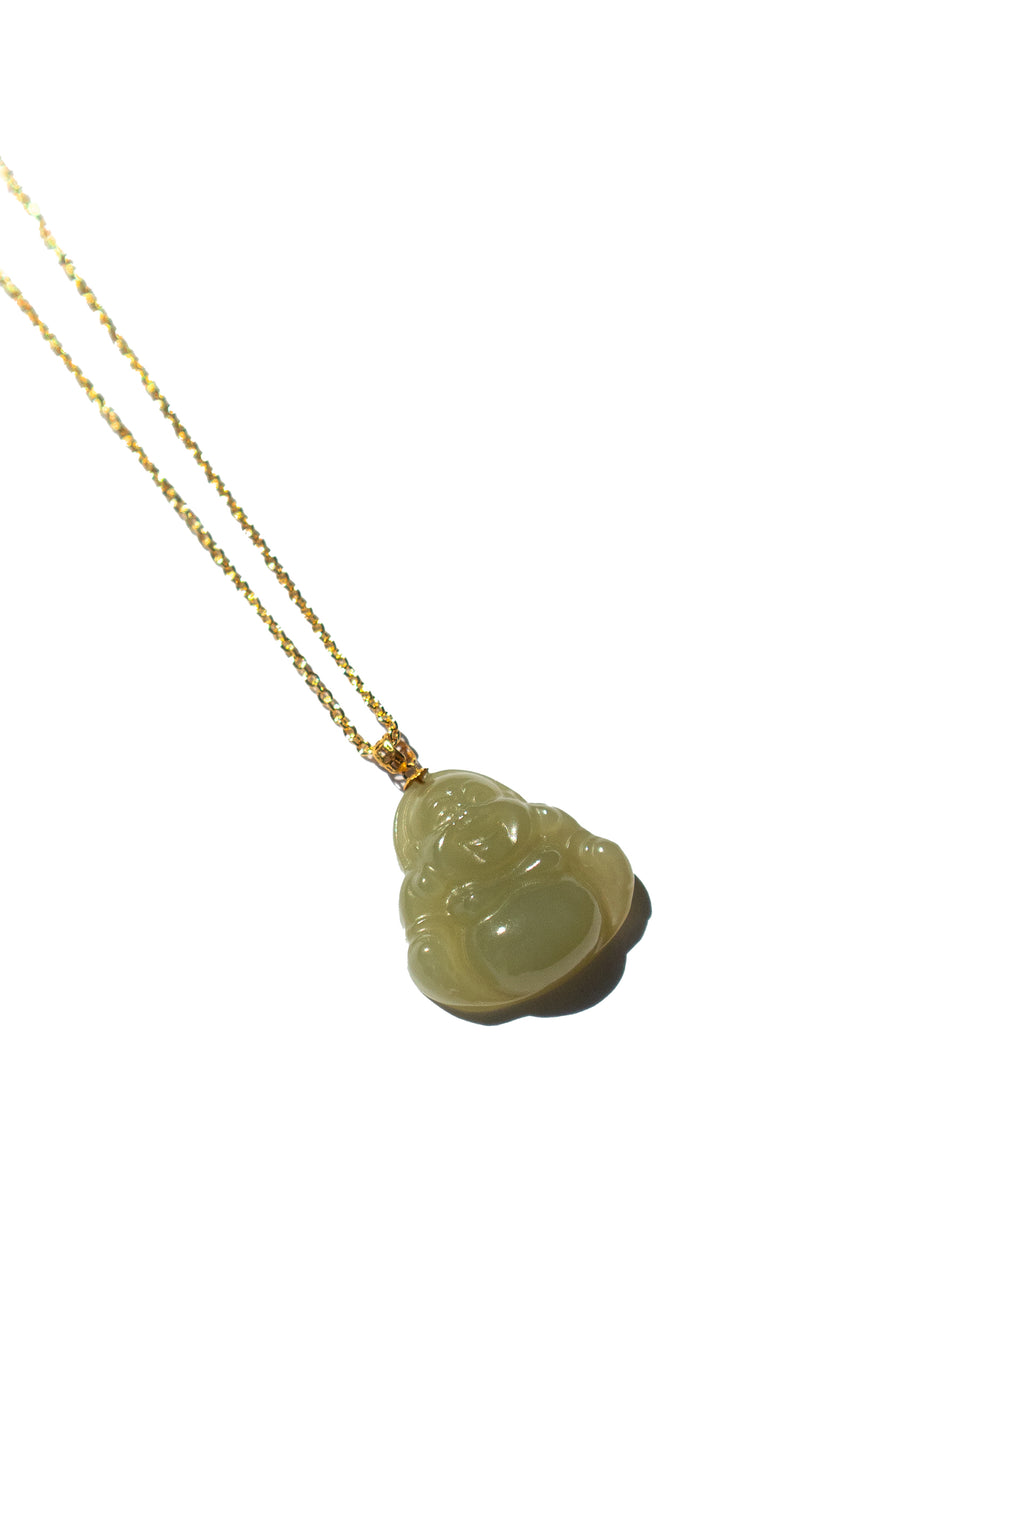 seree-jade-necklace-with-green-buddha-pendant-2